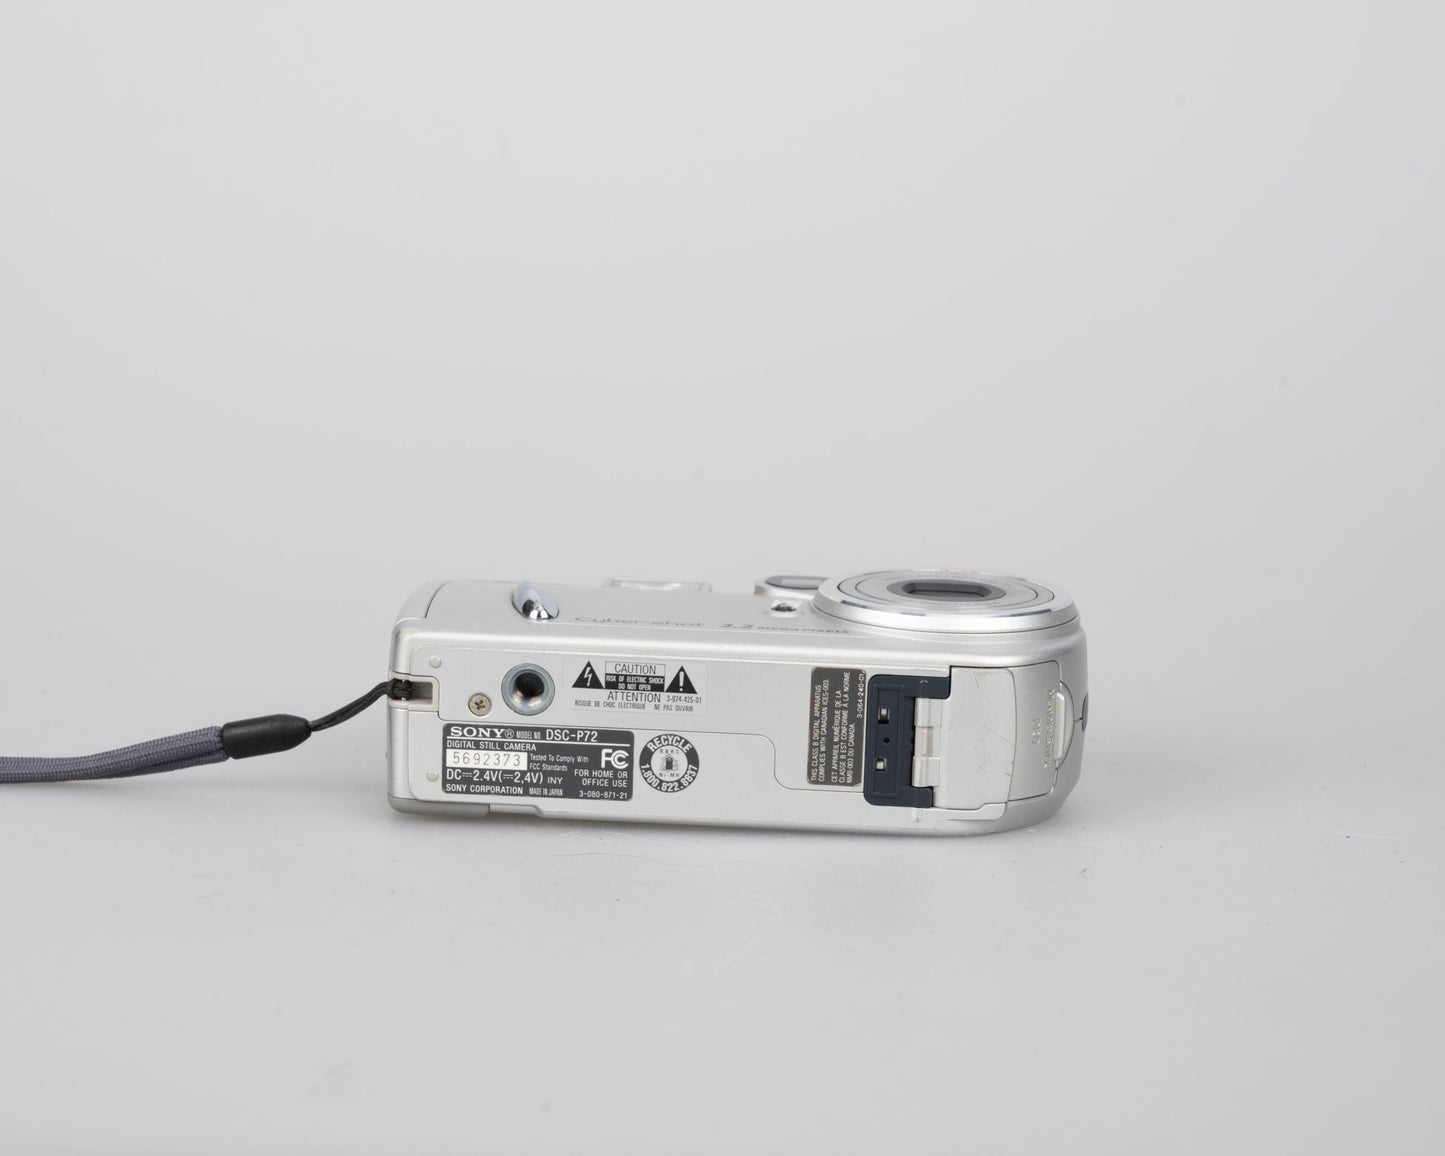 Sony Cyber-Shot DSC-P72 3.1 MP CCD sensor digicam w/ 16MB Memory Stick card + original case (uses AA batteries)